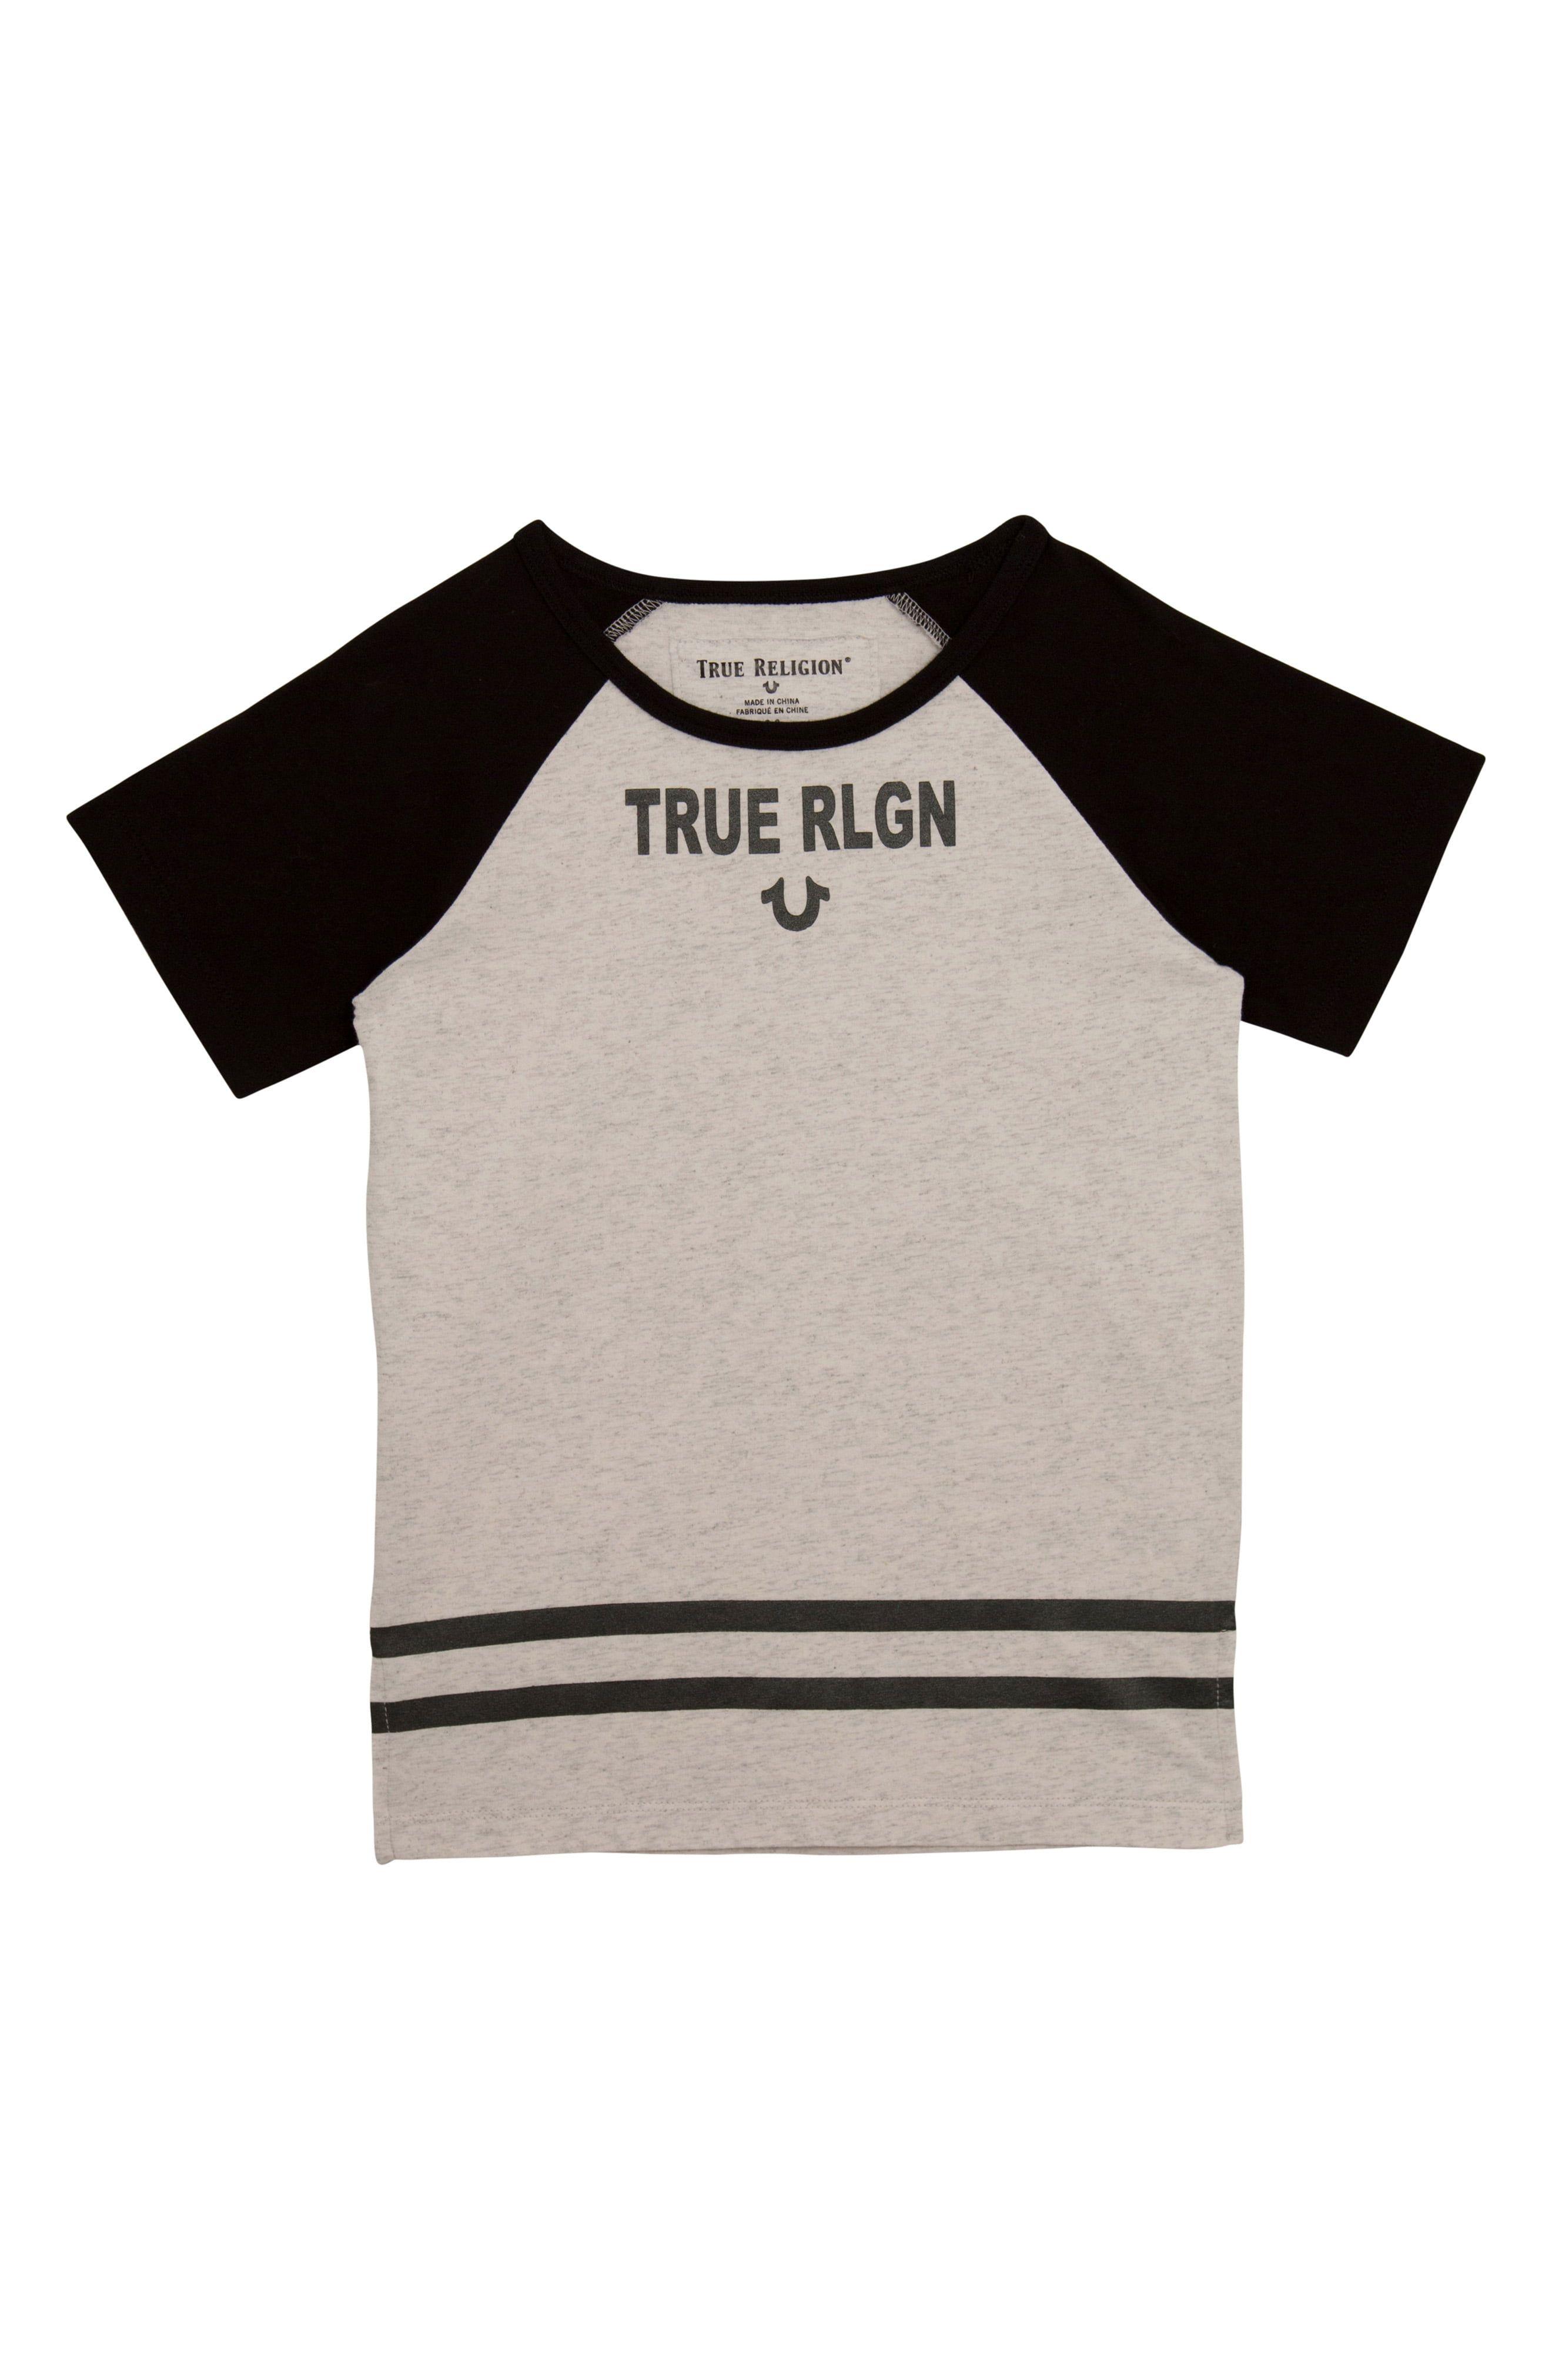 Truereligionbrandjeans Logo - UPC 190162494424 - Toddler Boy's True Religion Brand Jeans Logo ...